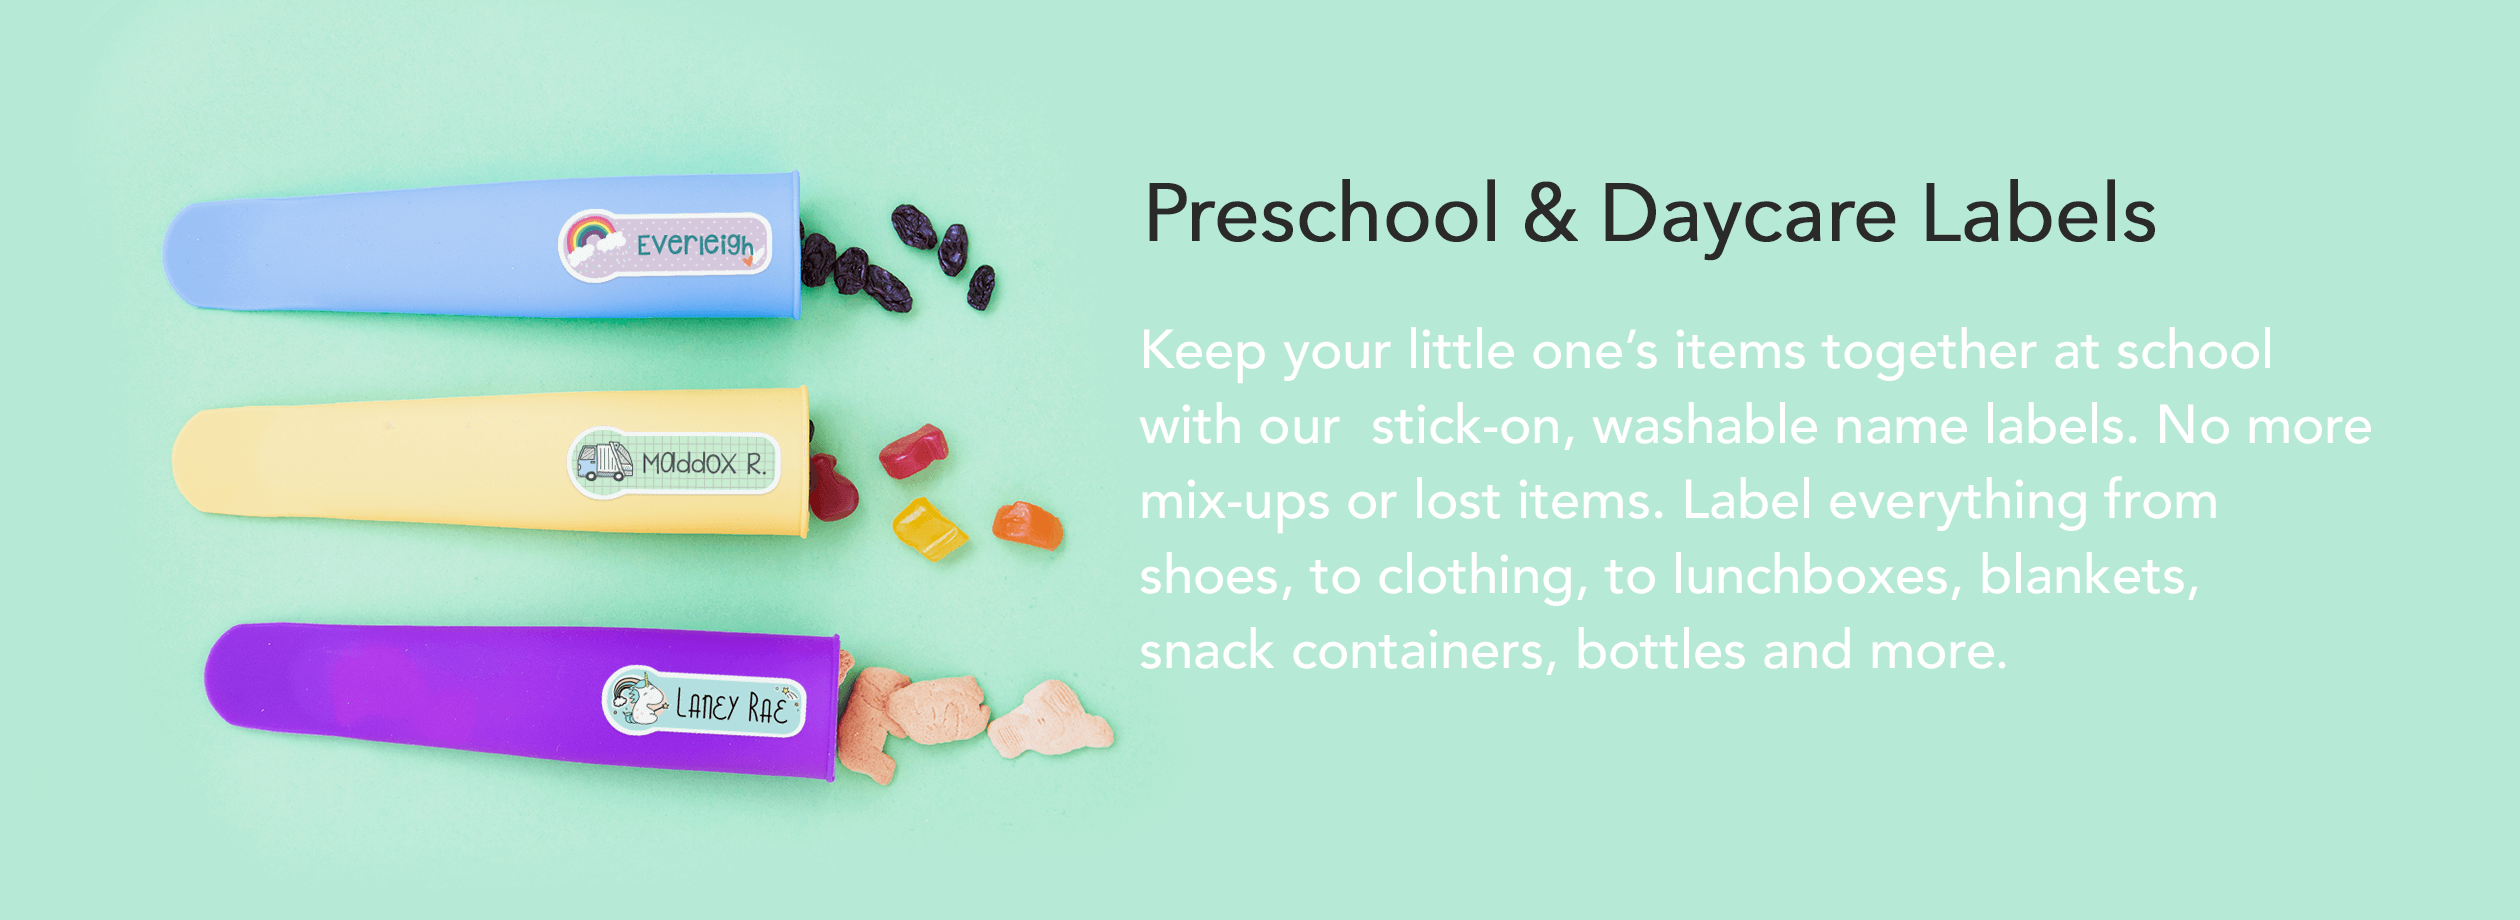 Preschool & Daycare Labels & Stickers